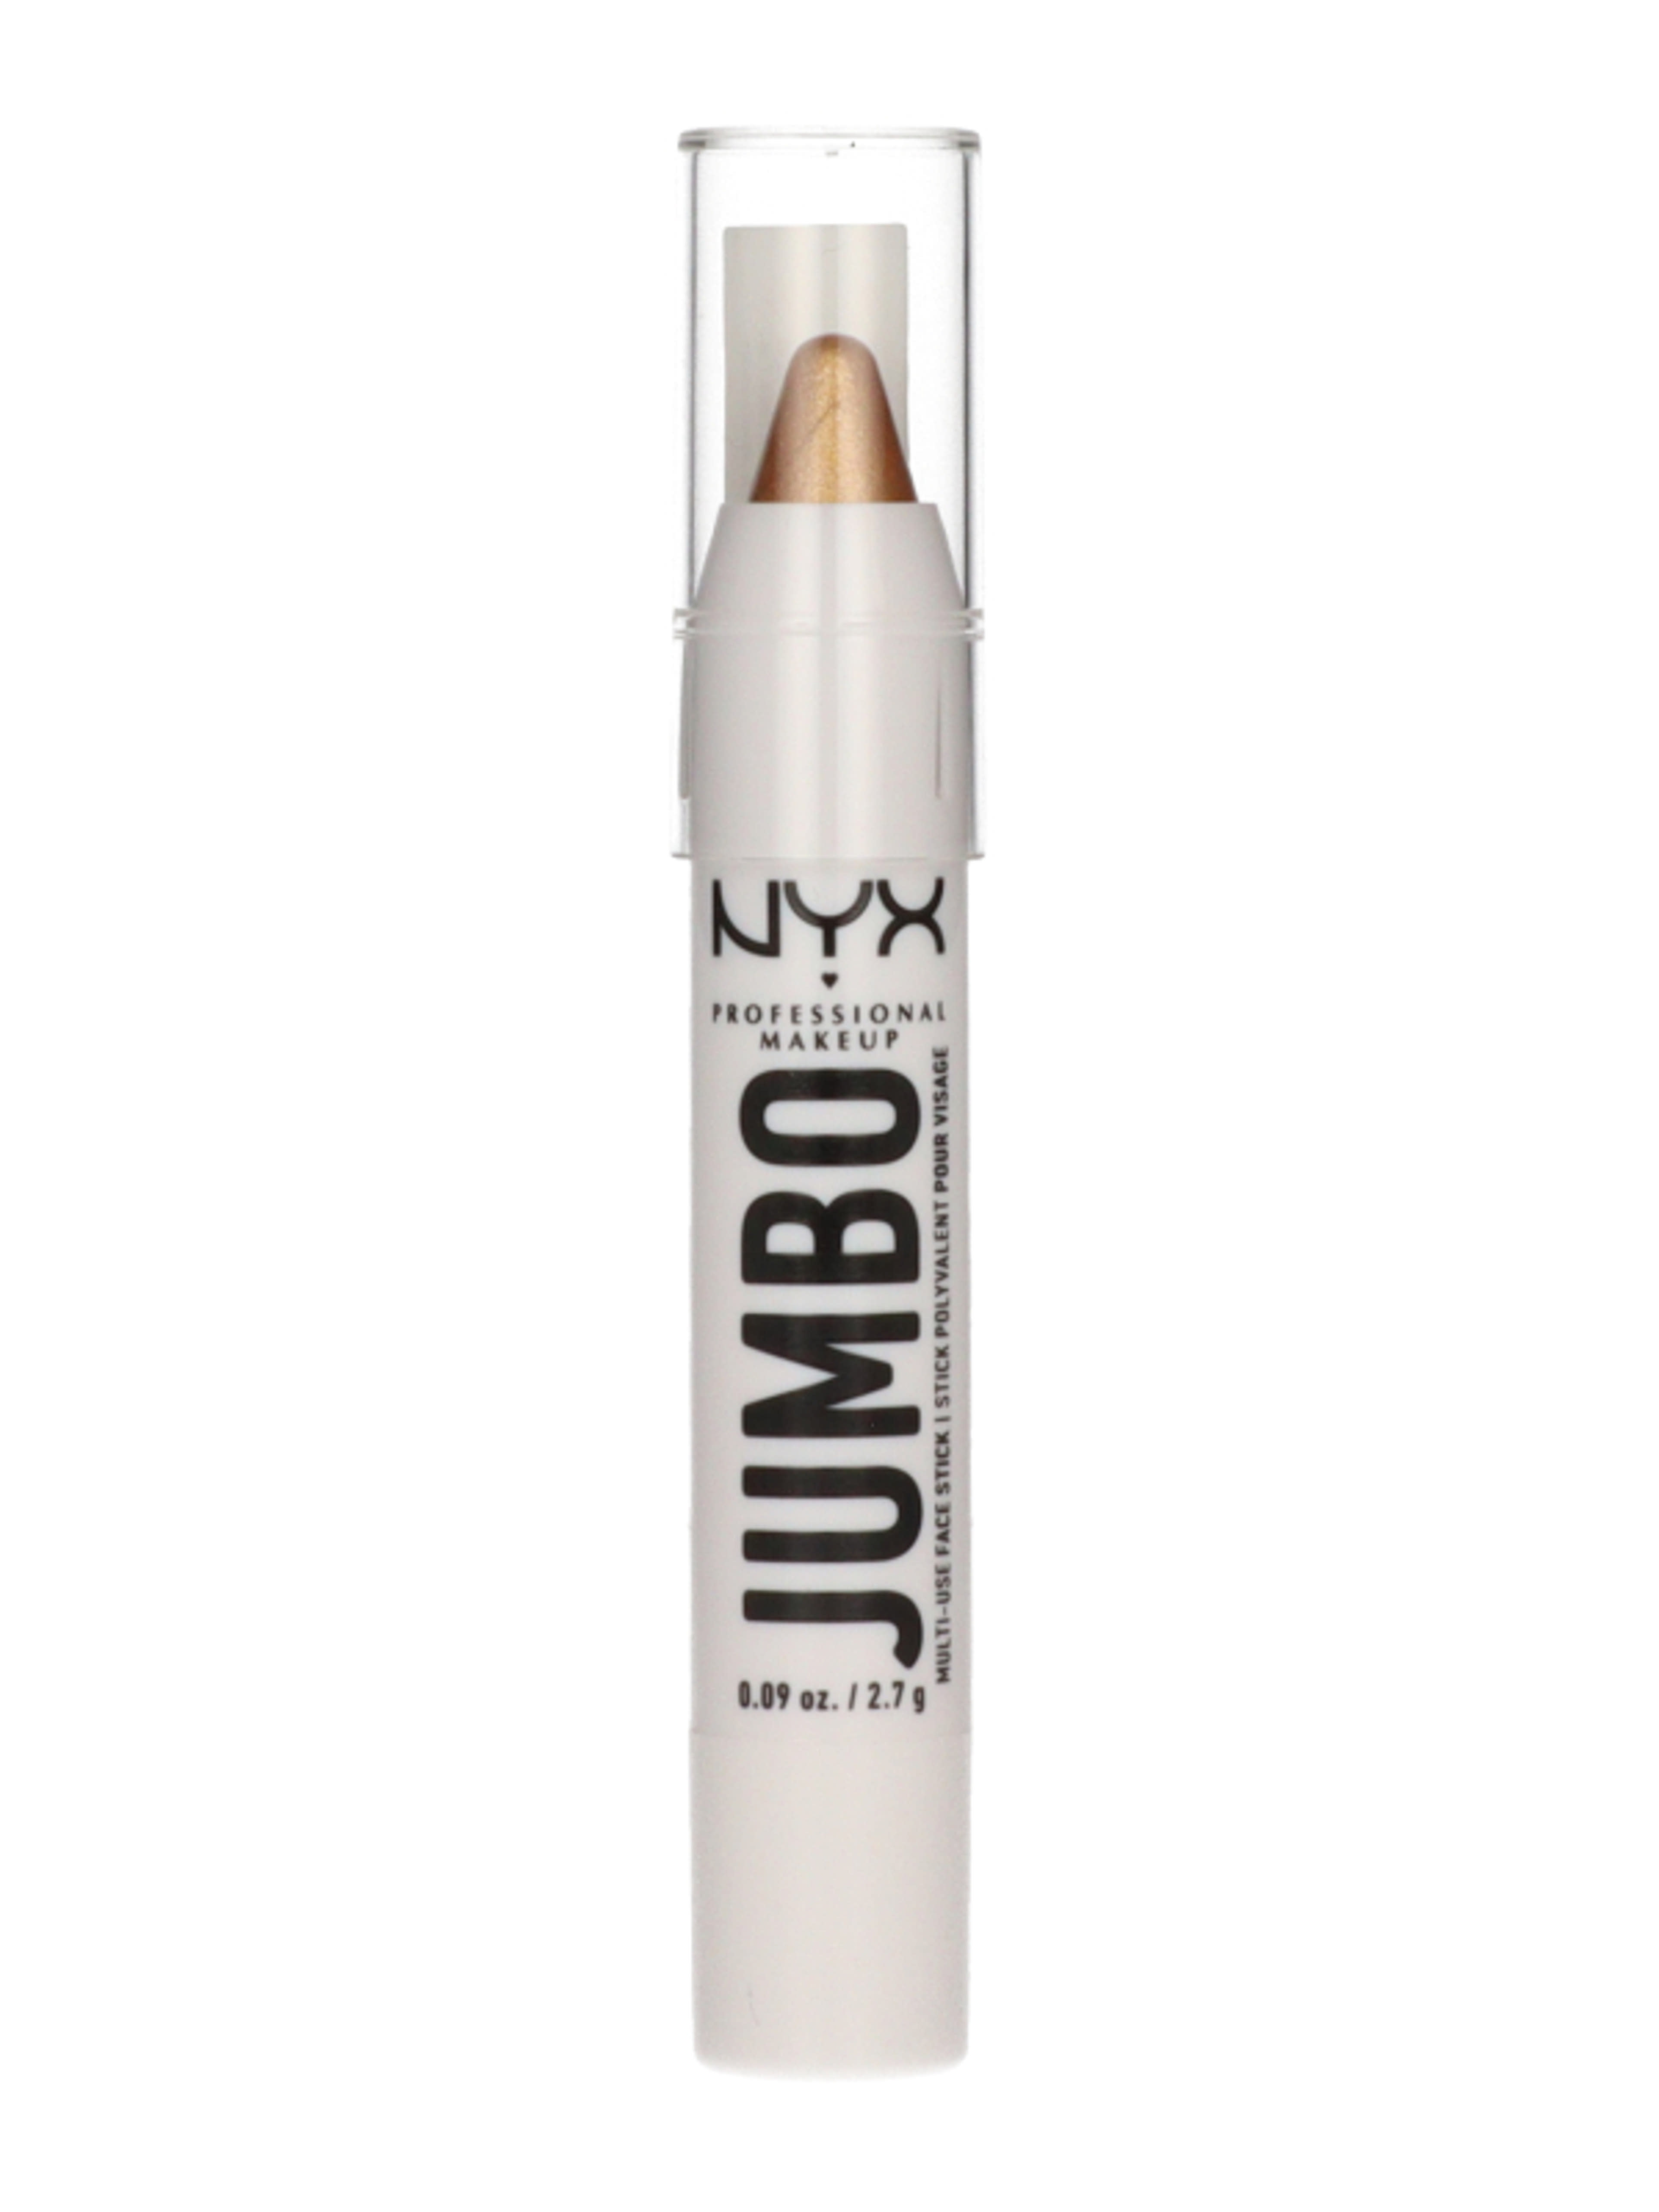 NYX Professional Makeup Jumbo Stick highlighter /apple pie - 1 db-2